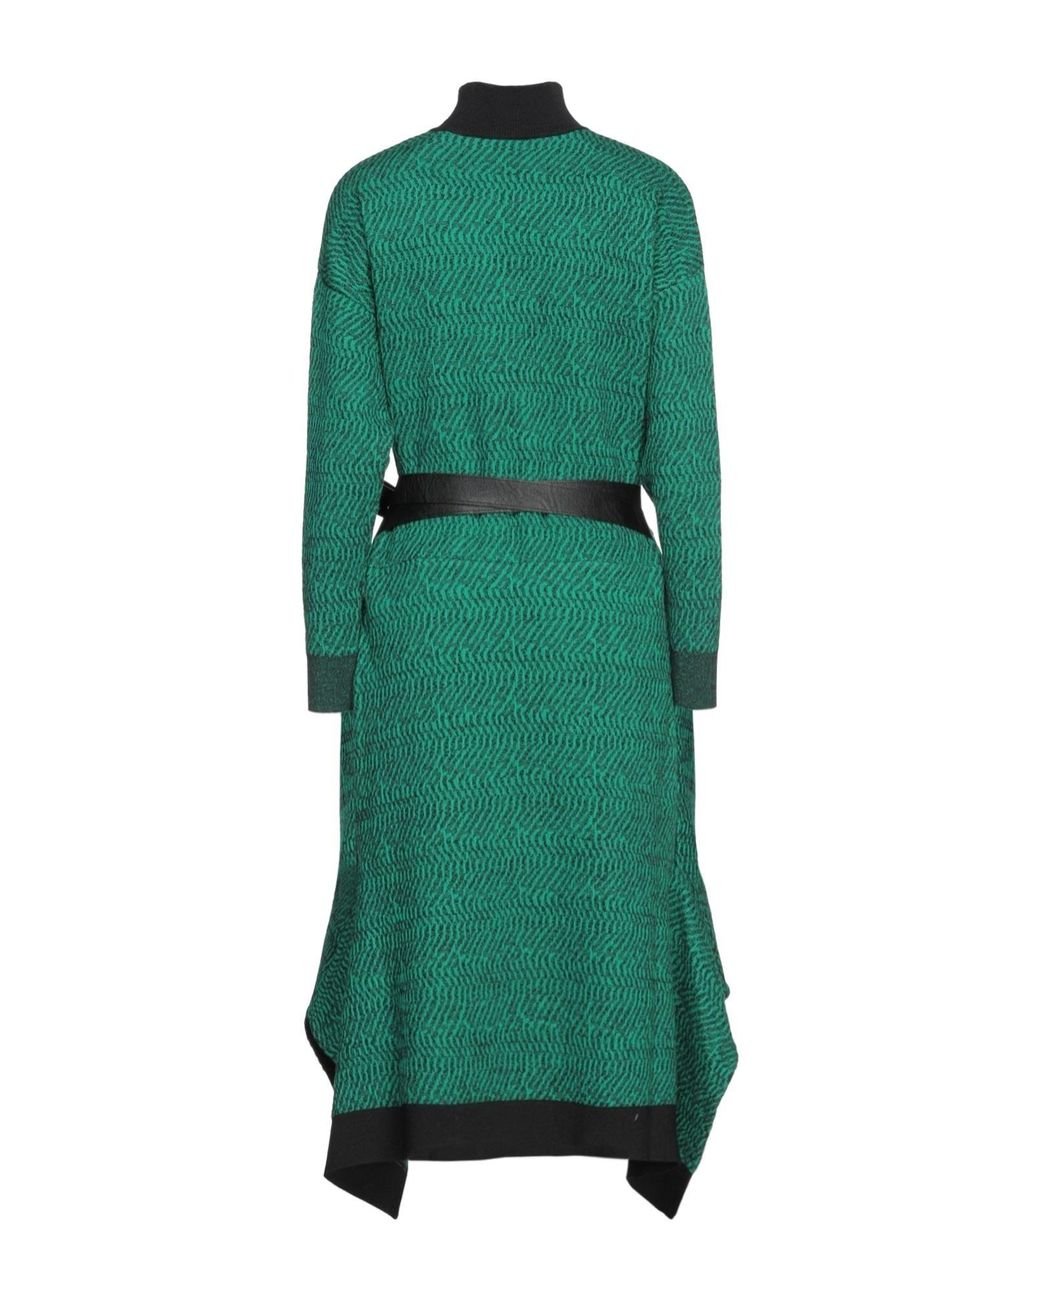 Stella McCartney Midi Dress in Green - Lyst